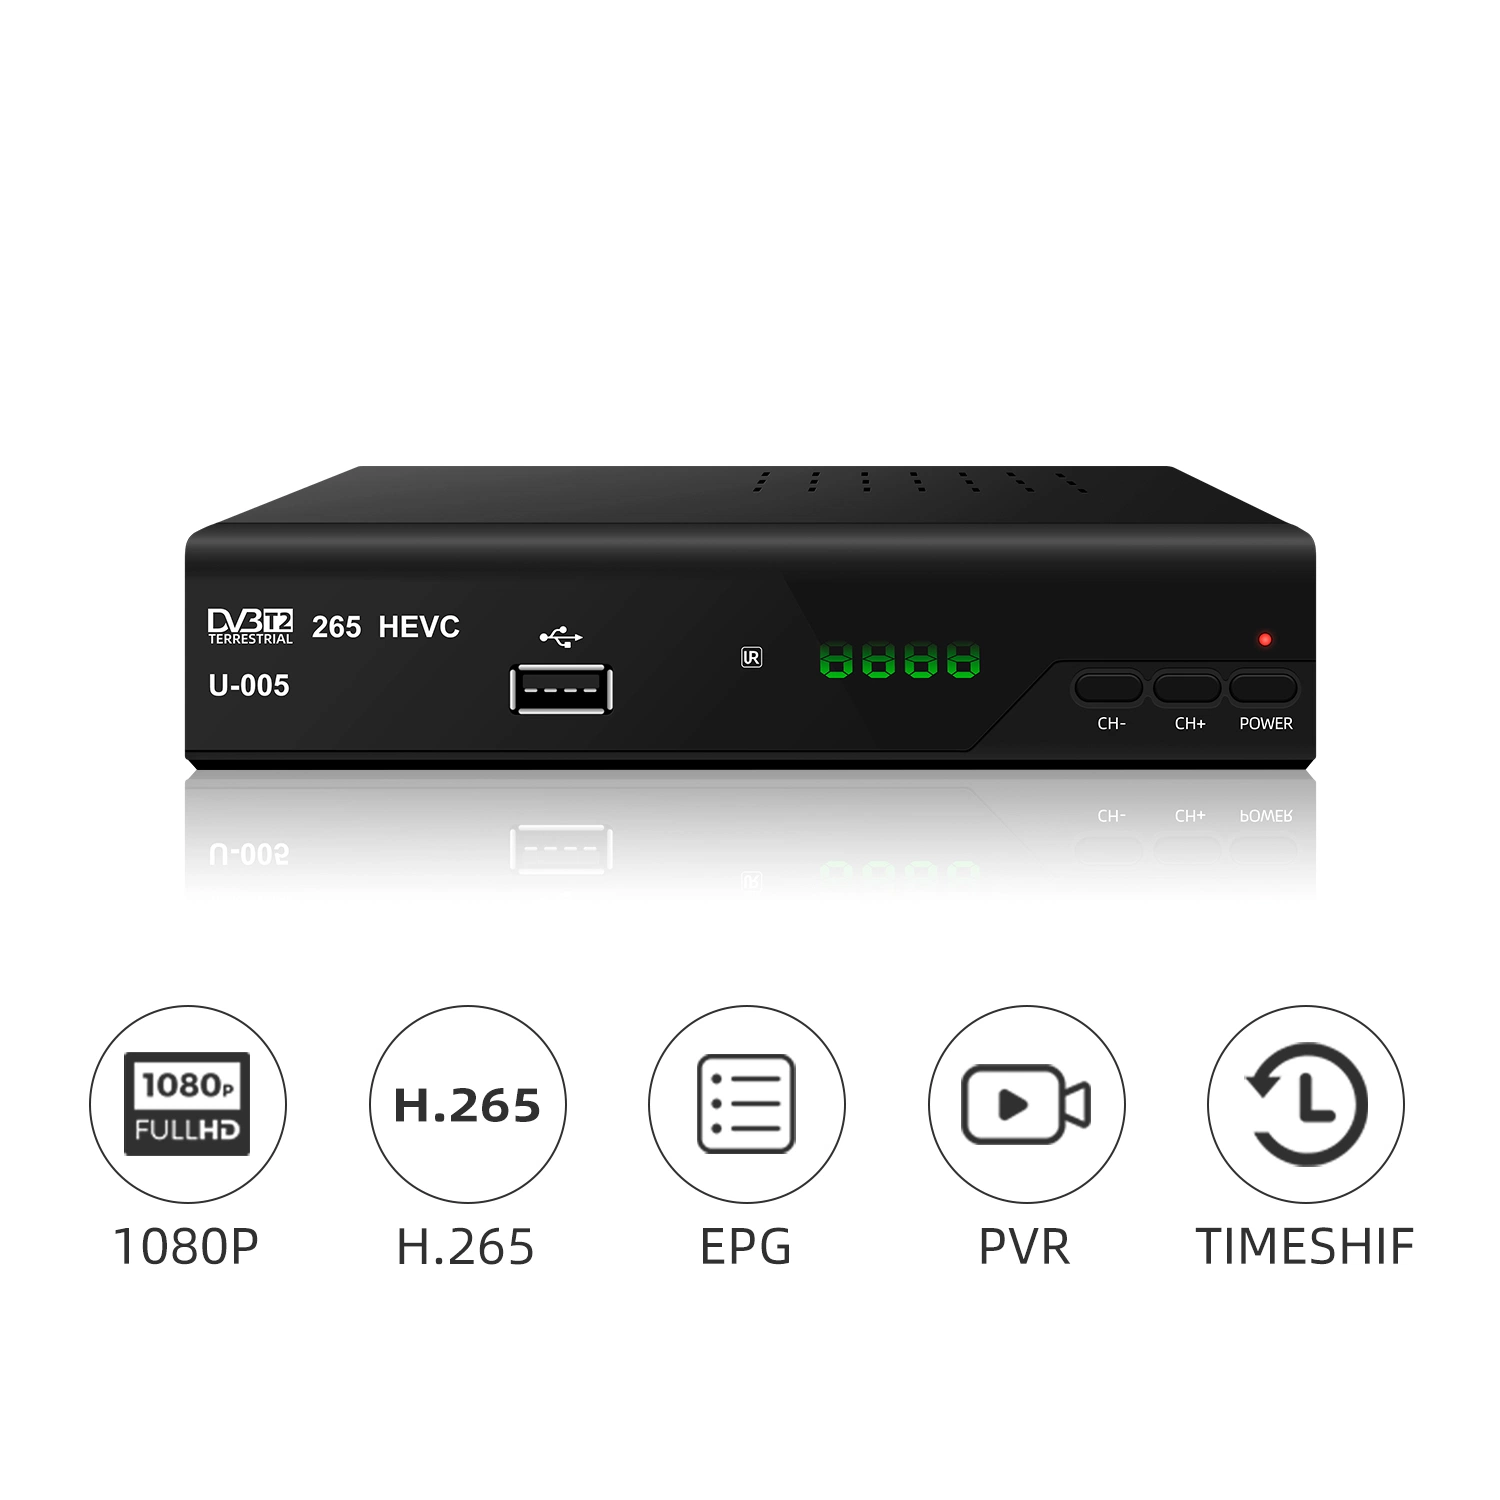 Ale européenne Full HD Digital DVB-T2 récepteur terrestre H. 265 Hevc Mediaplayer péritel USB